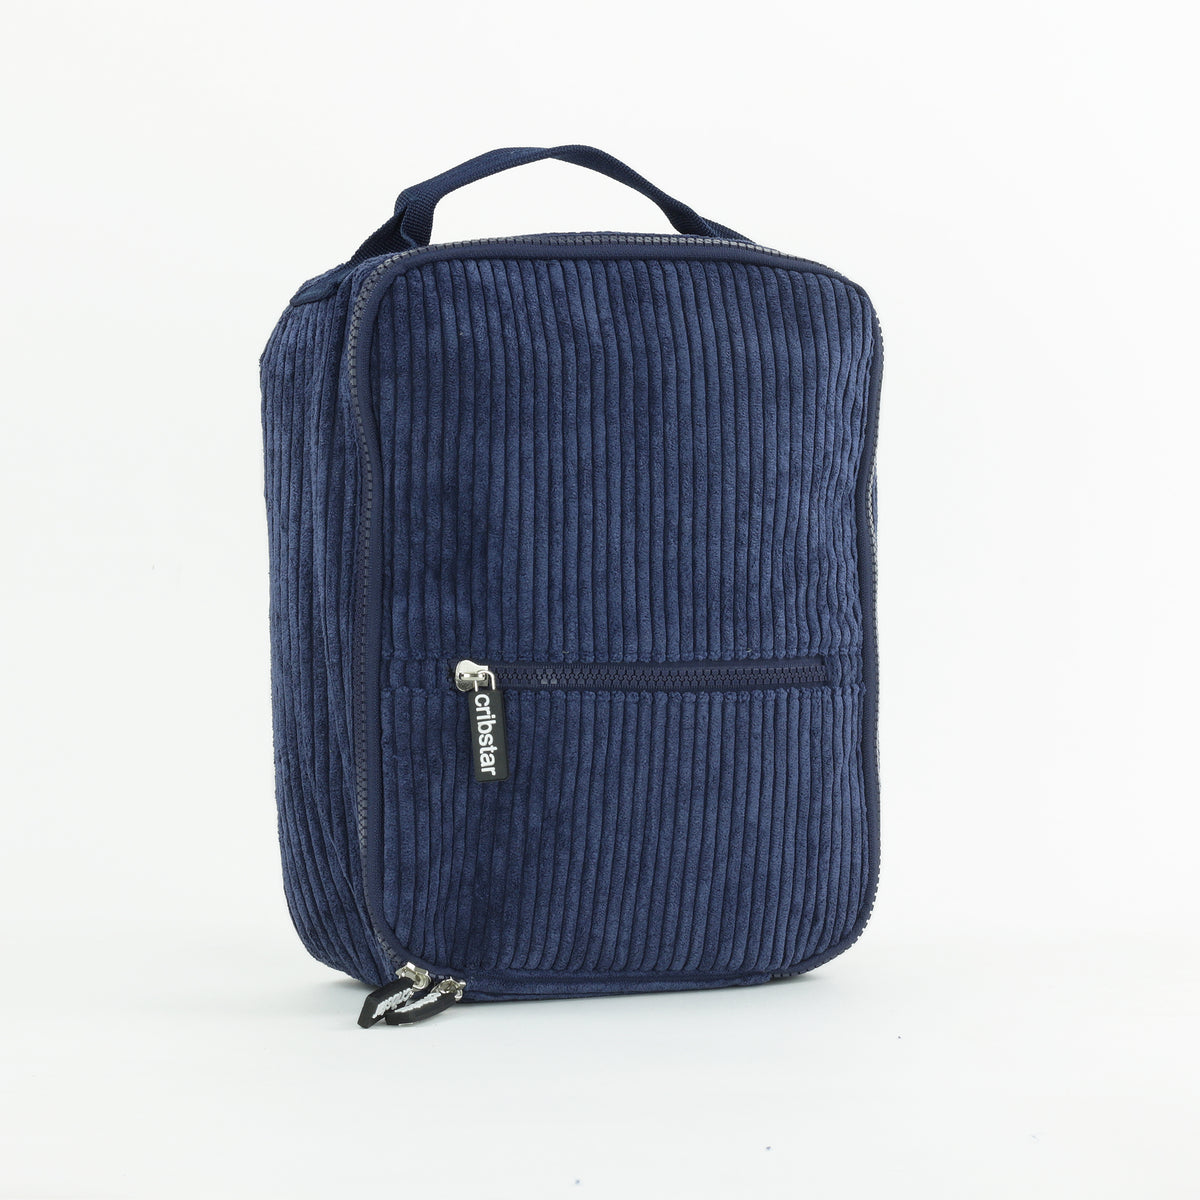 Corduroy Lunch Bag - Navy Blue